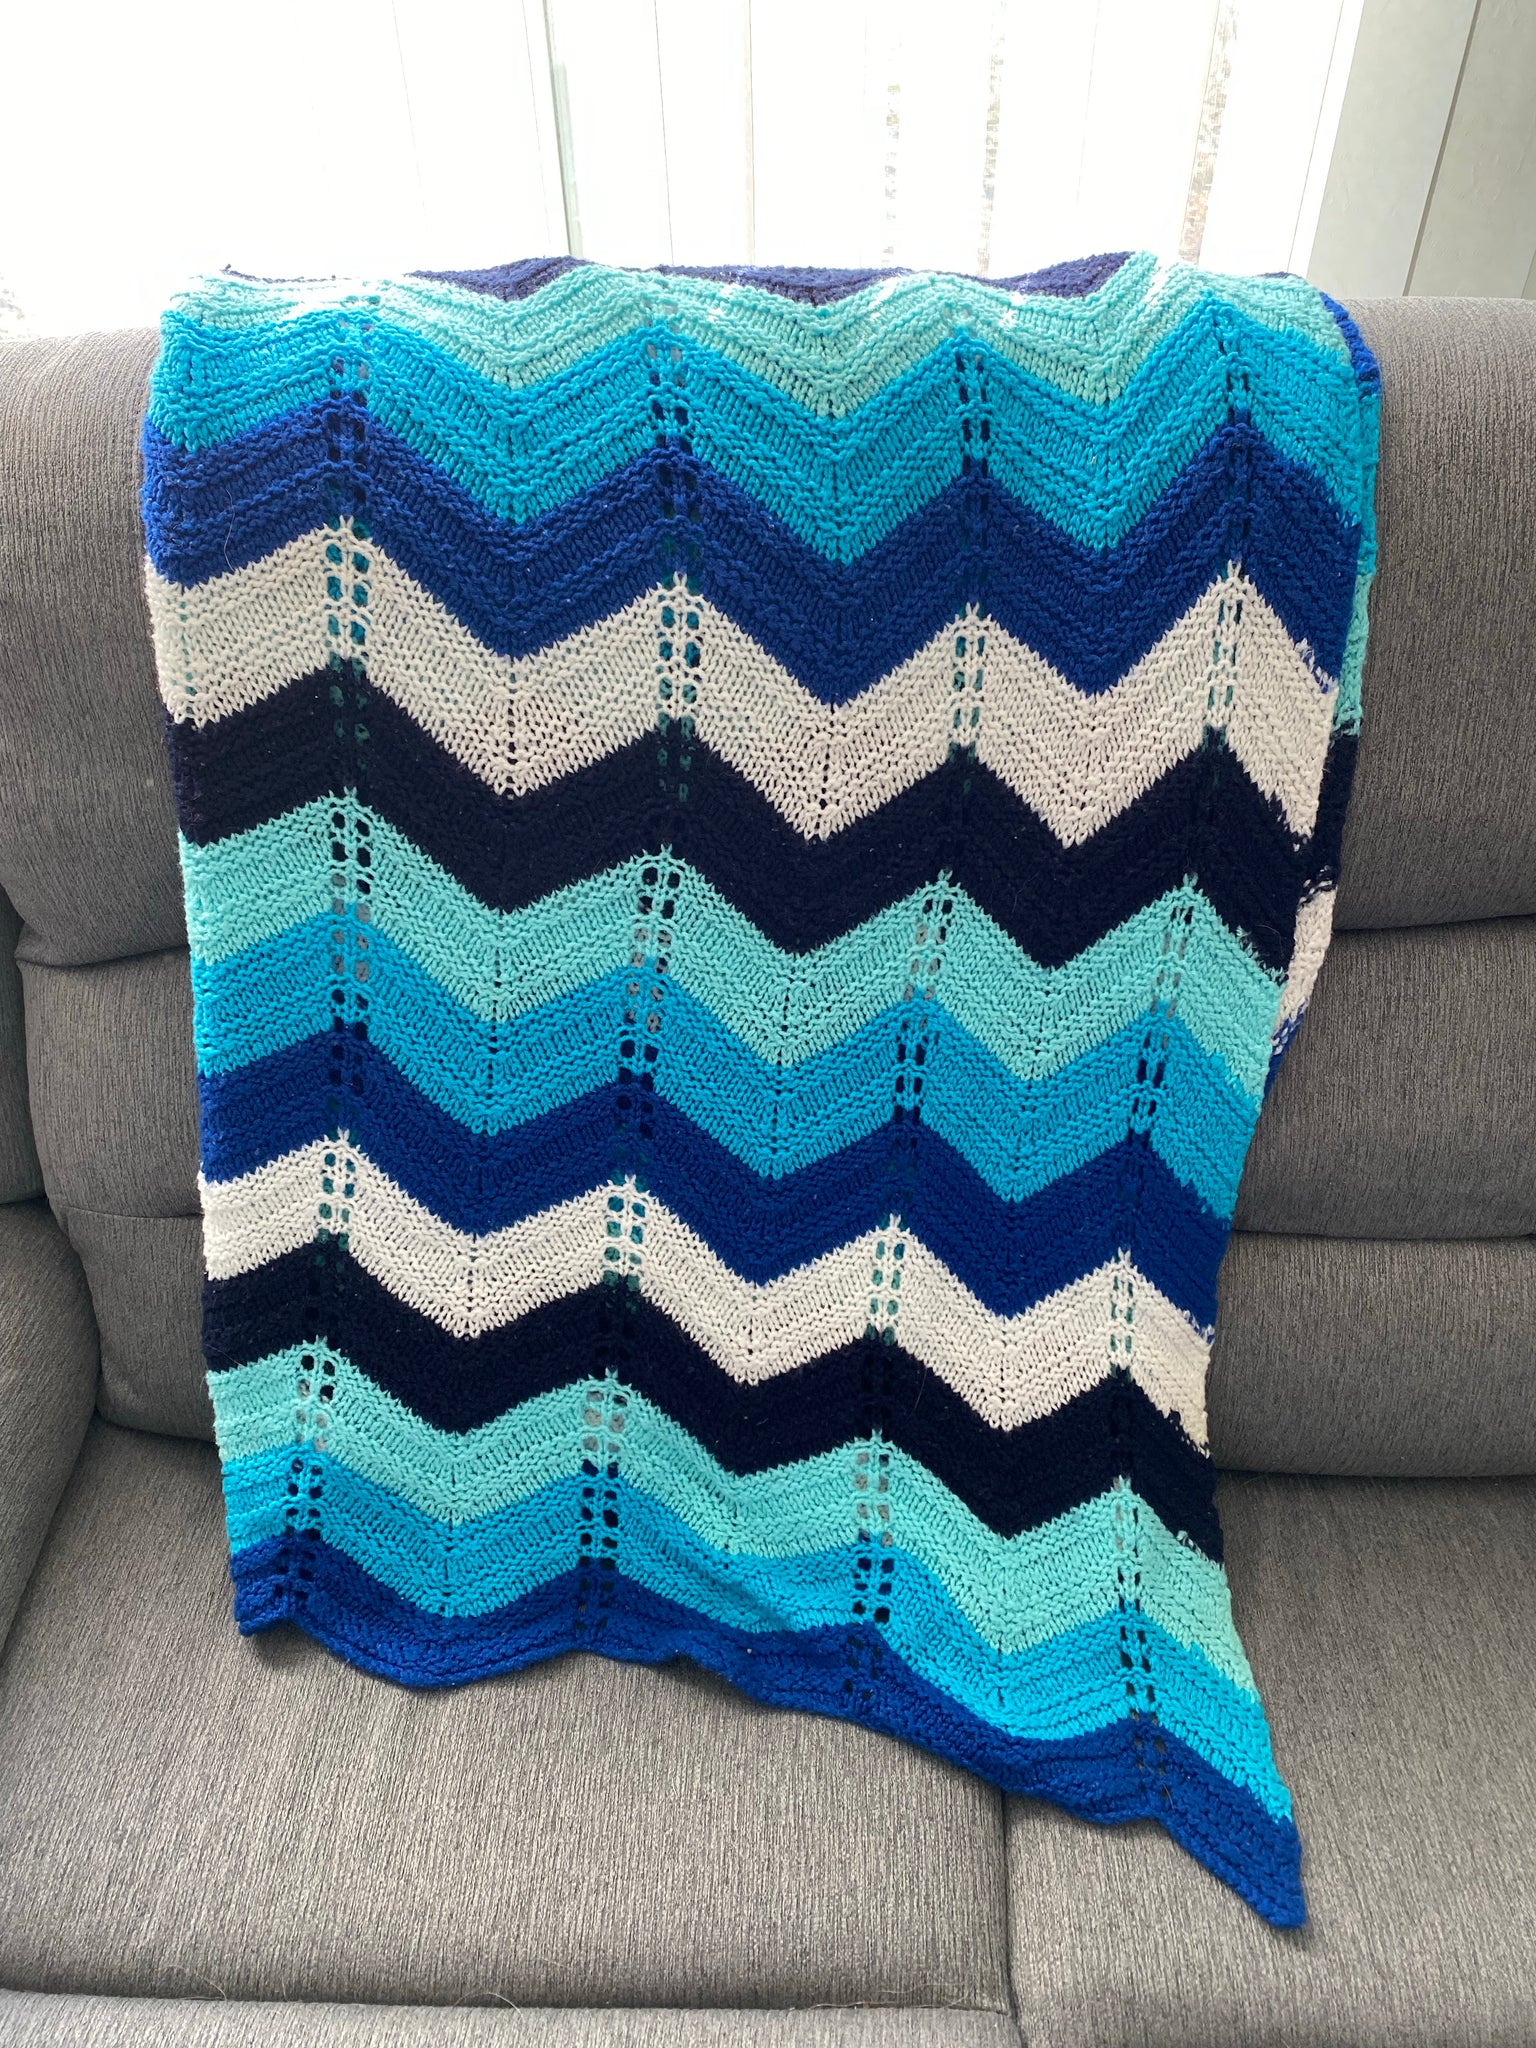 Chevron blues vintage knitted blanket